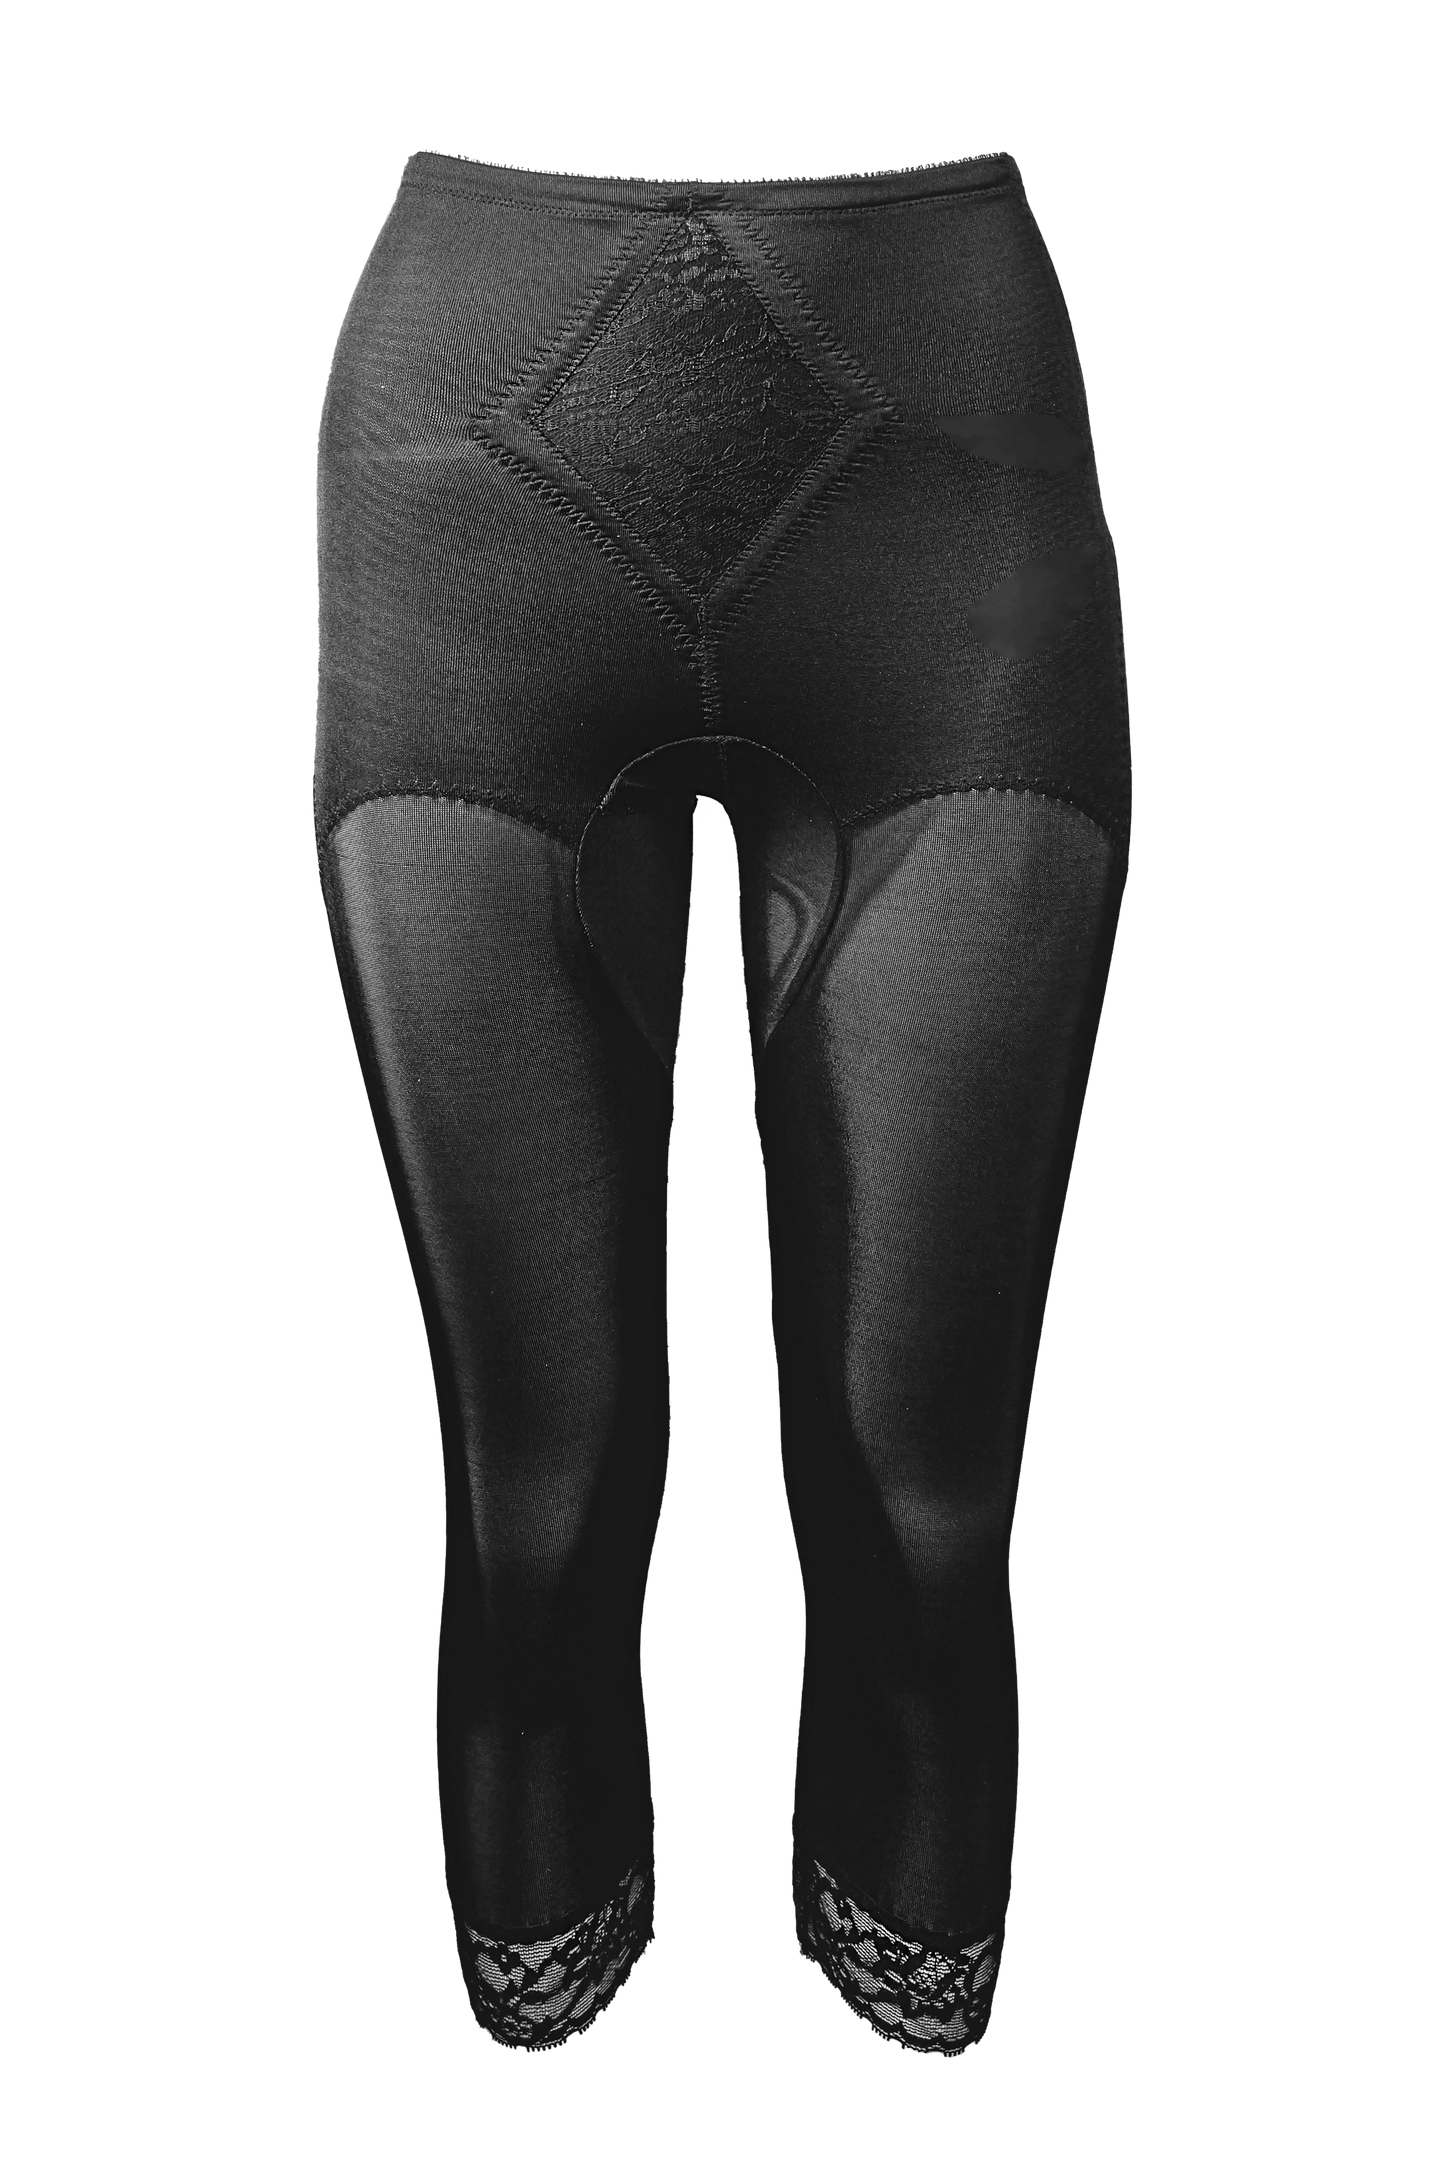 Style 6265 | Leg Shaper/Pant Liner Medium Shaping